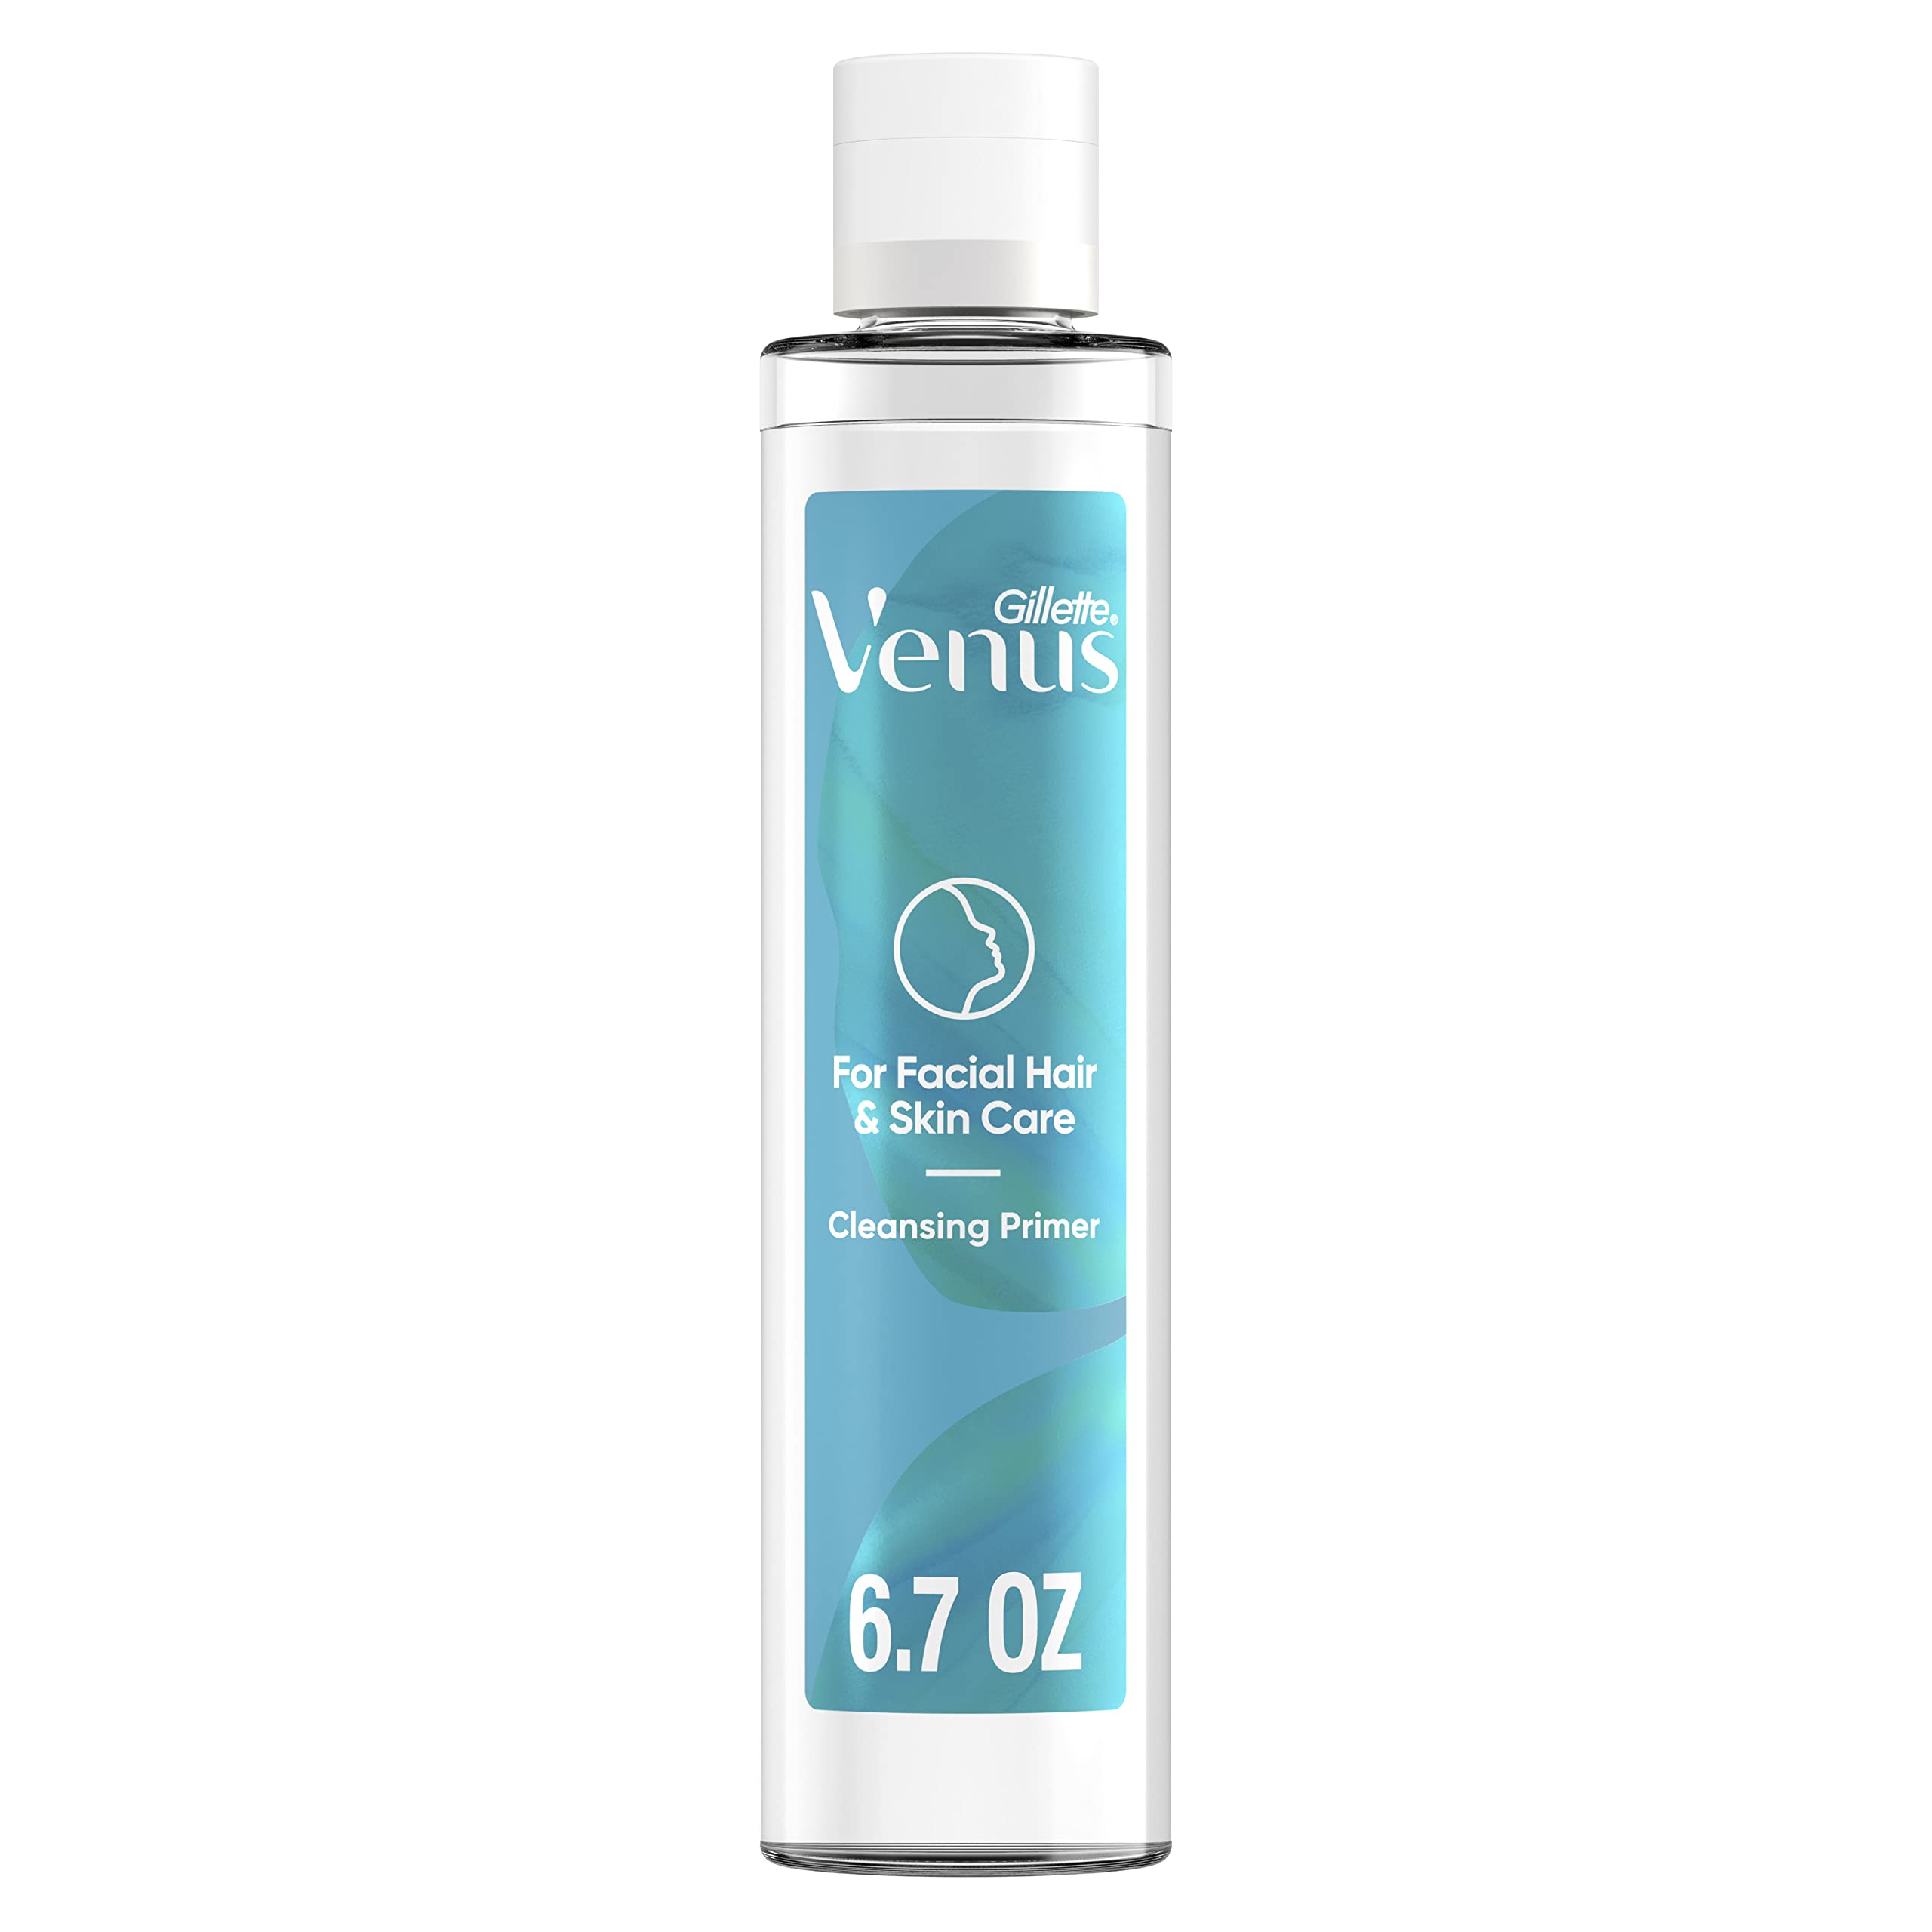 Gillette Venus for Facial Hair & Skin Care Cleansing Primer for Dermaplane Prep, 6.7oz, Use Before Eyebrow Razor, Dermaplaning Oil, Dermaplane Moisturizer, Dermaplaning Cleanser and Face Wash